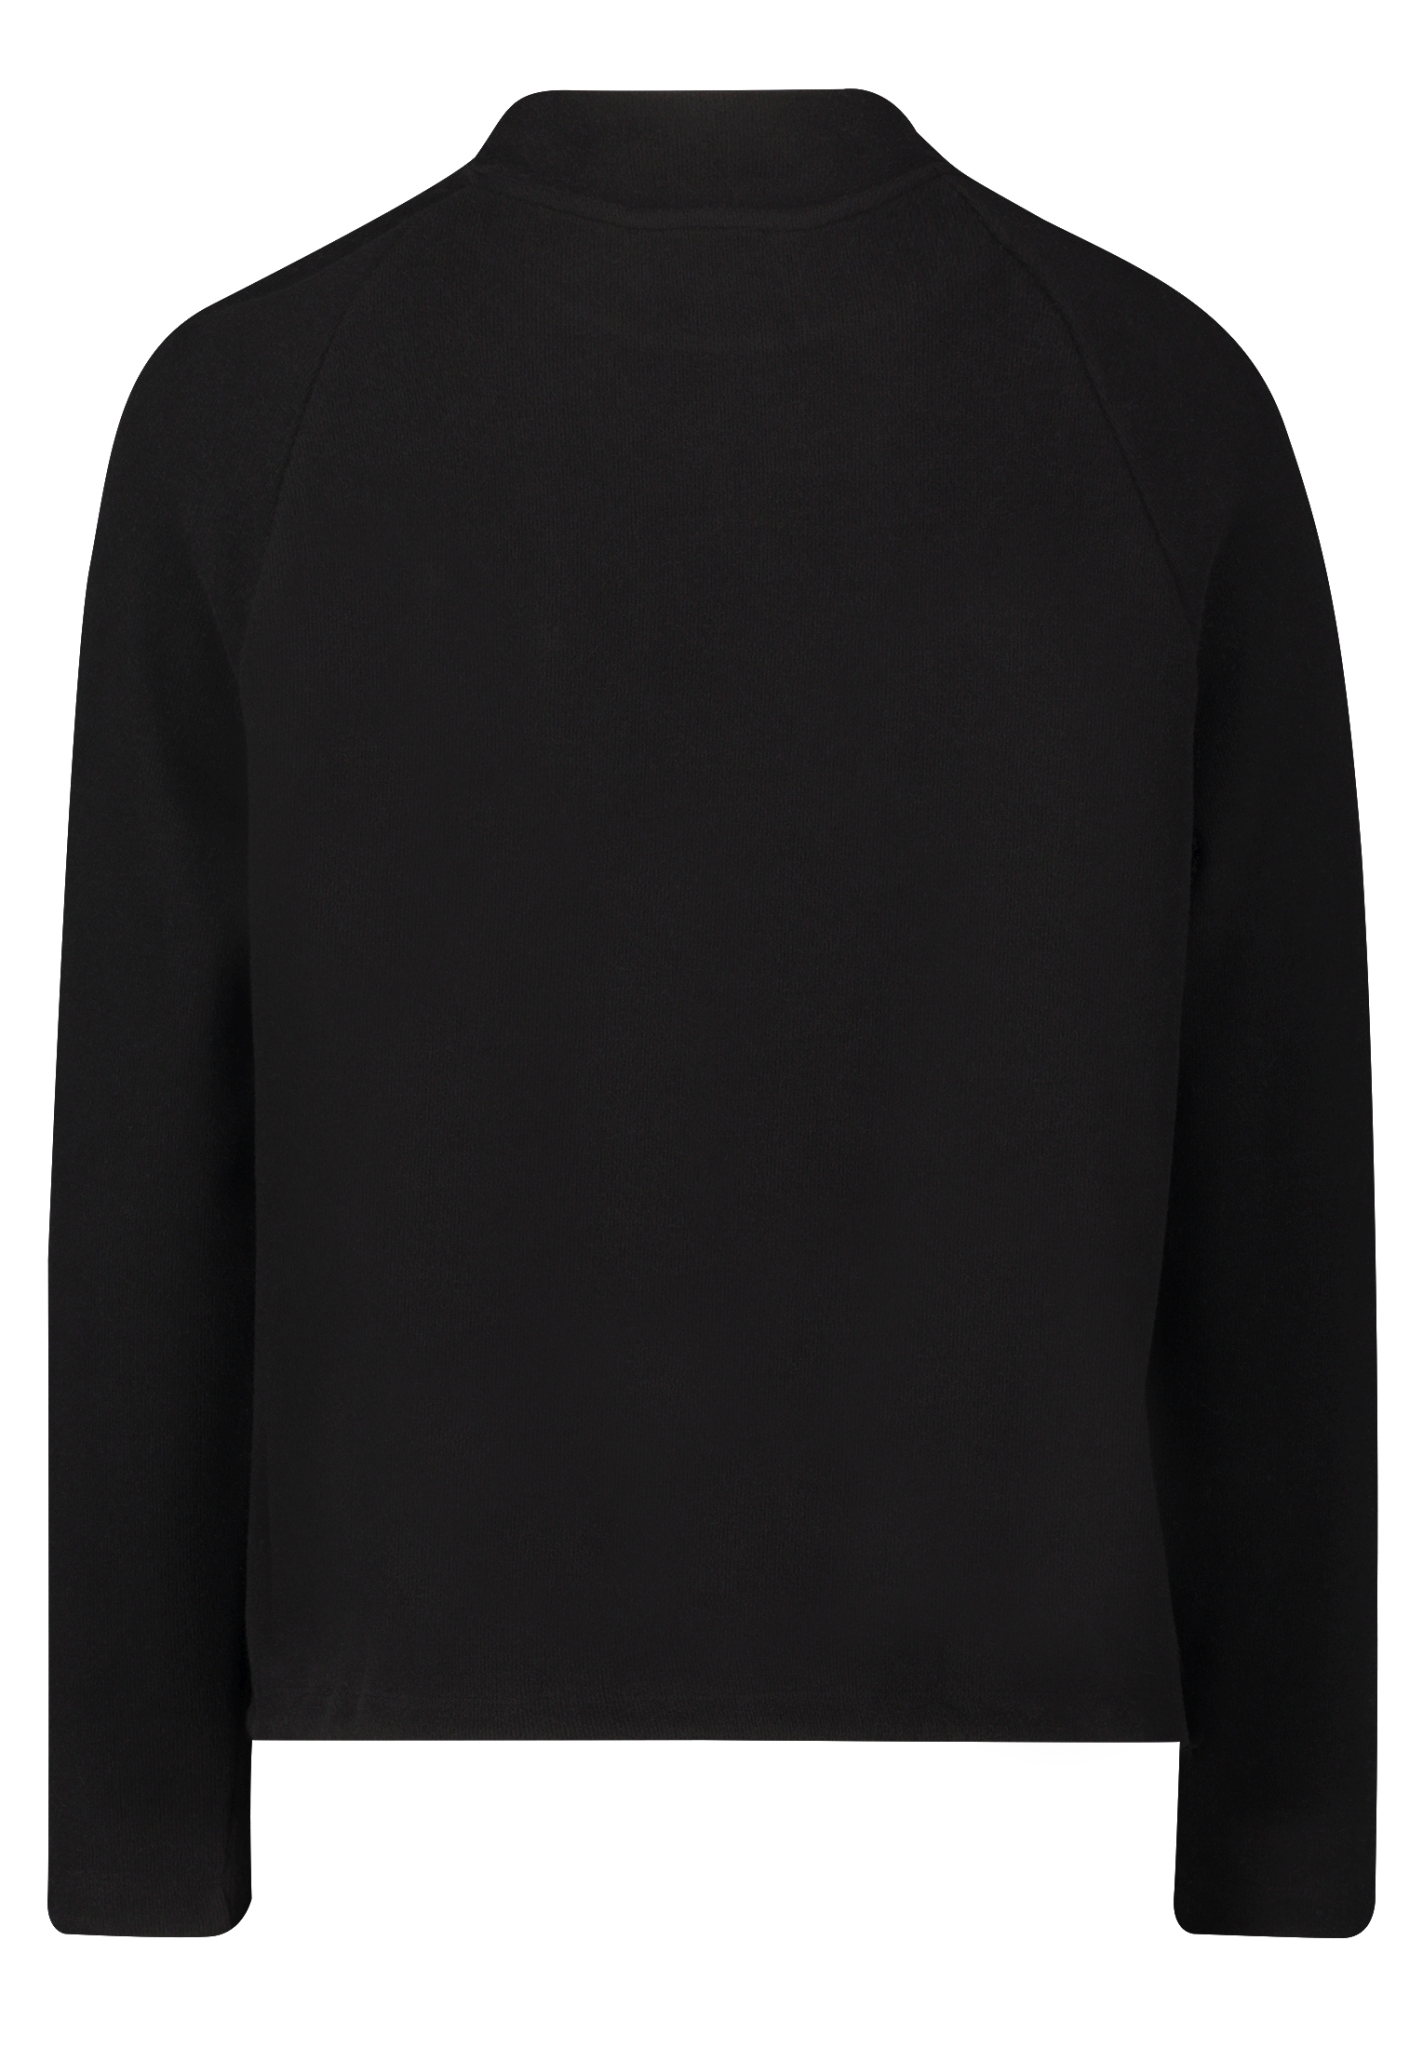 CARTOON Sweatshirt 10723509 kaufen | WÖHRL